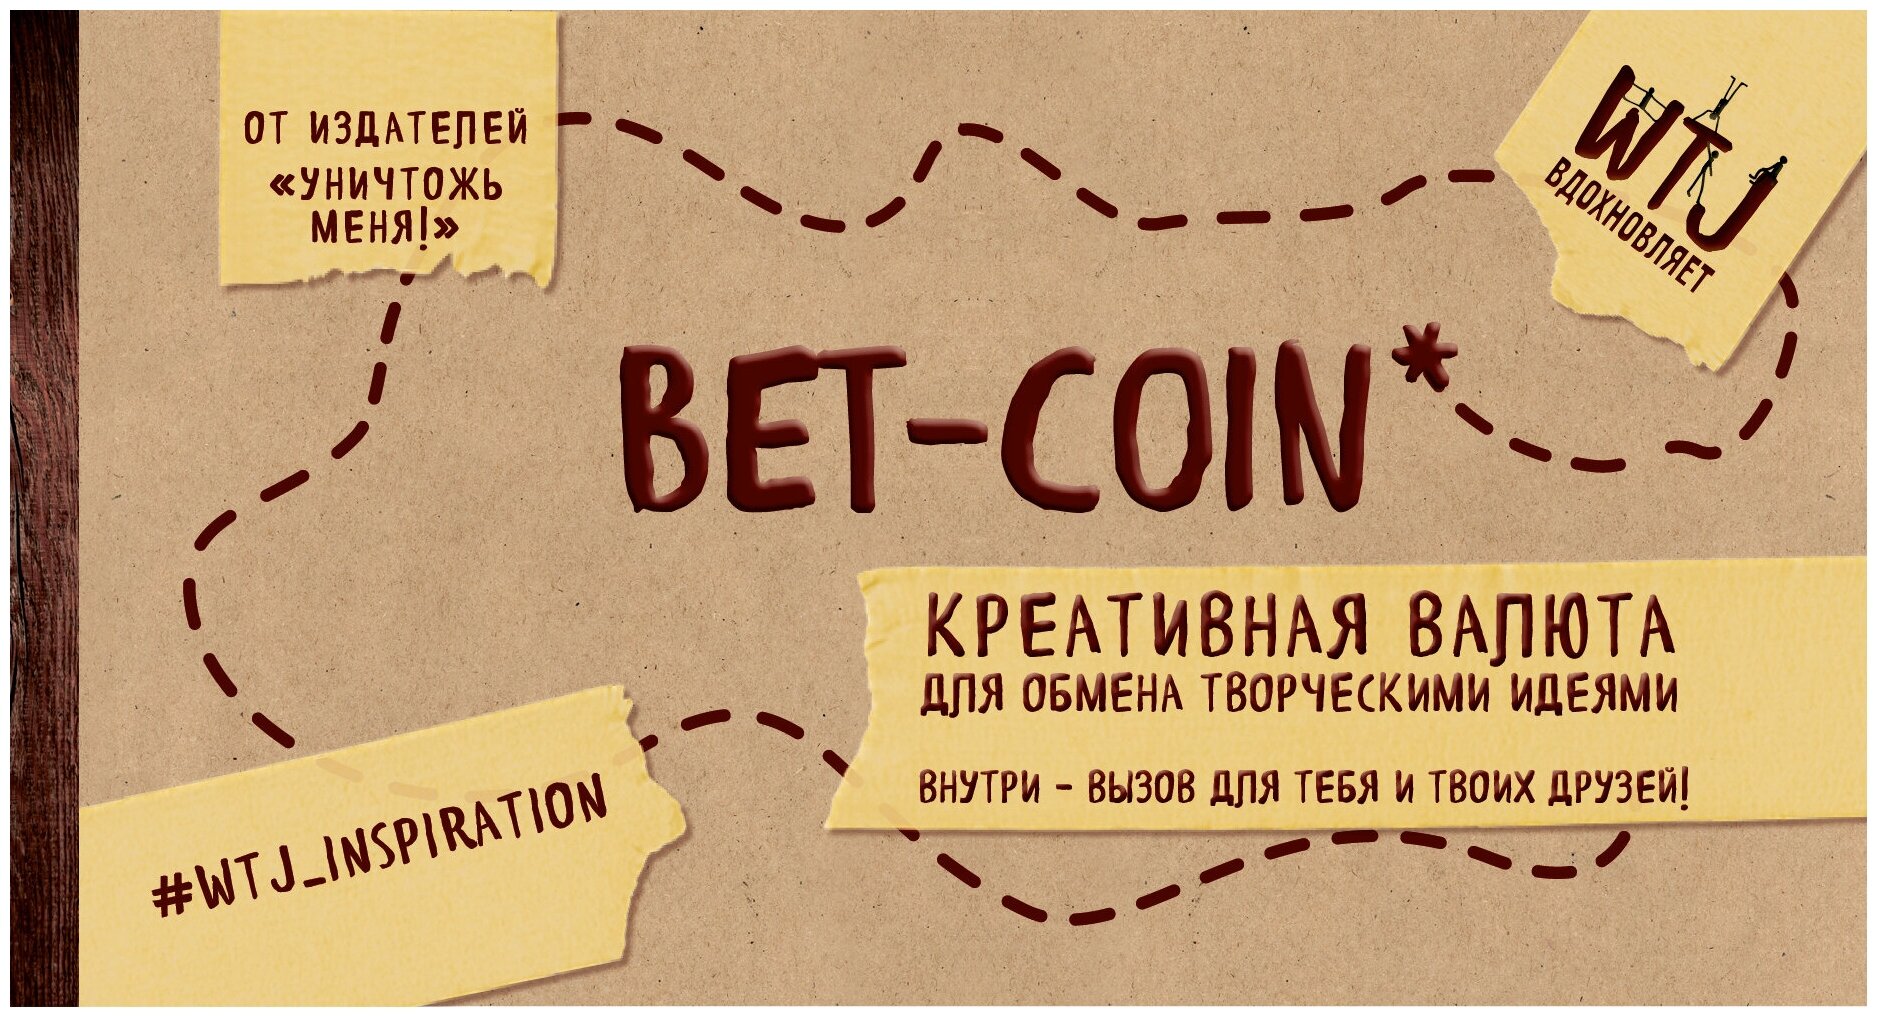 Bet-coin. Креативная валюта для обмена творческими идеями (на перфорации) - фото №6